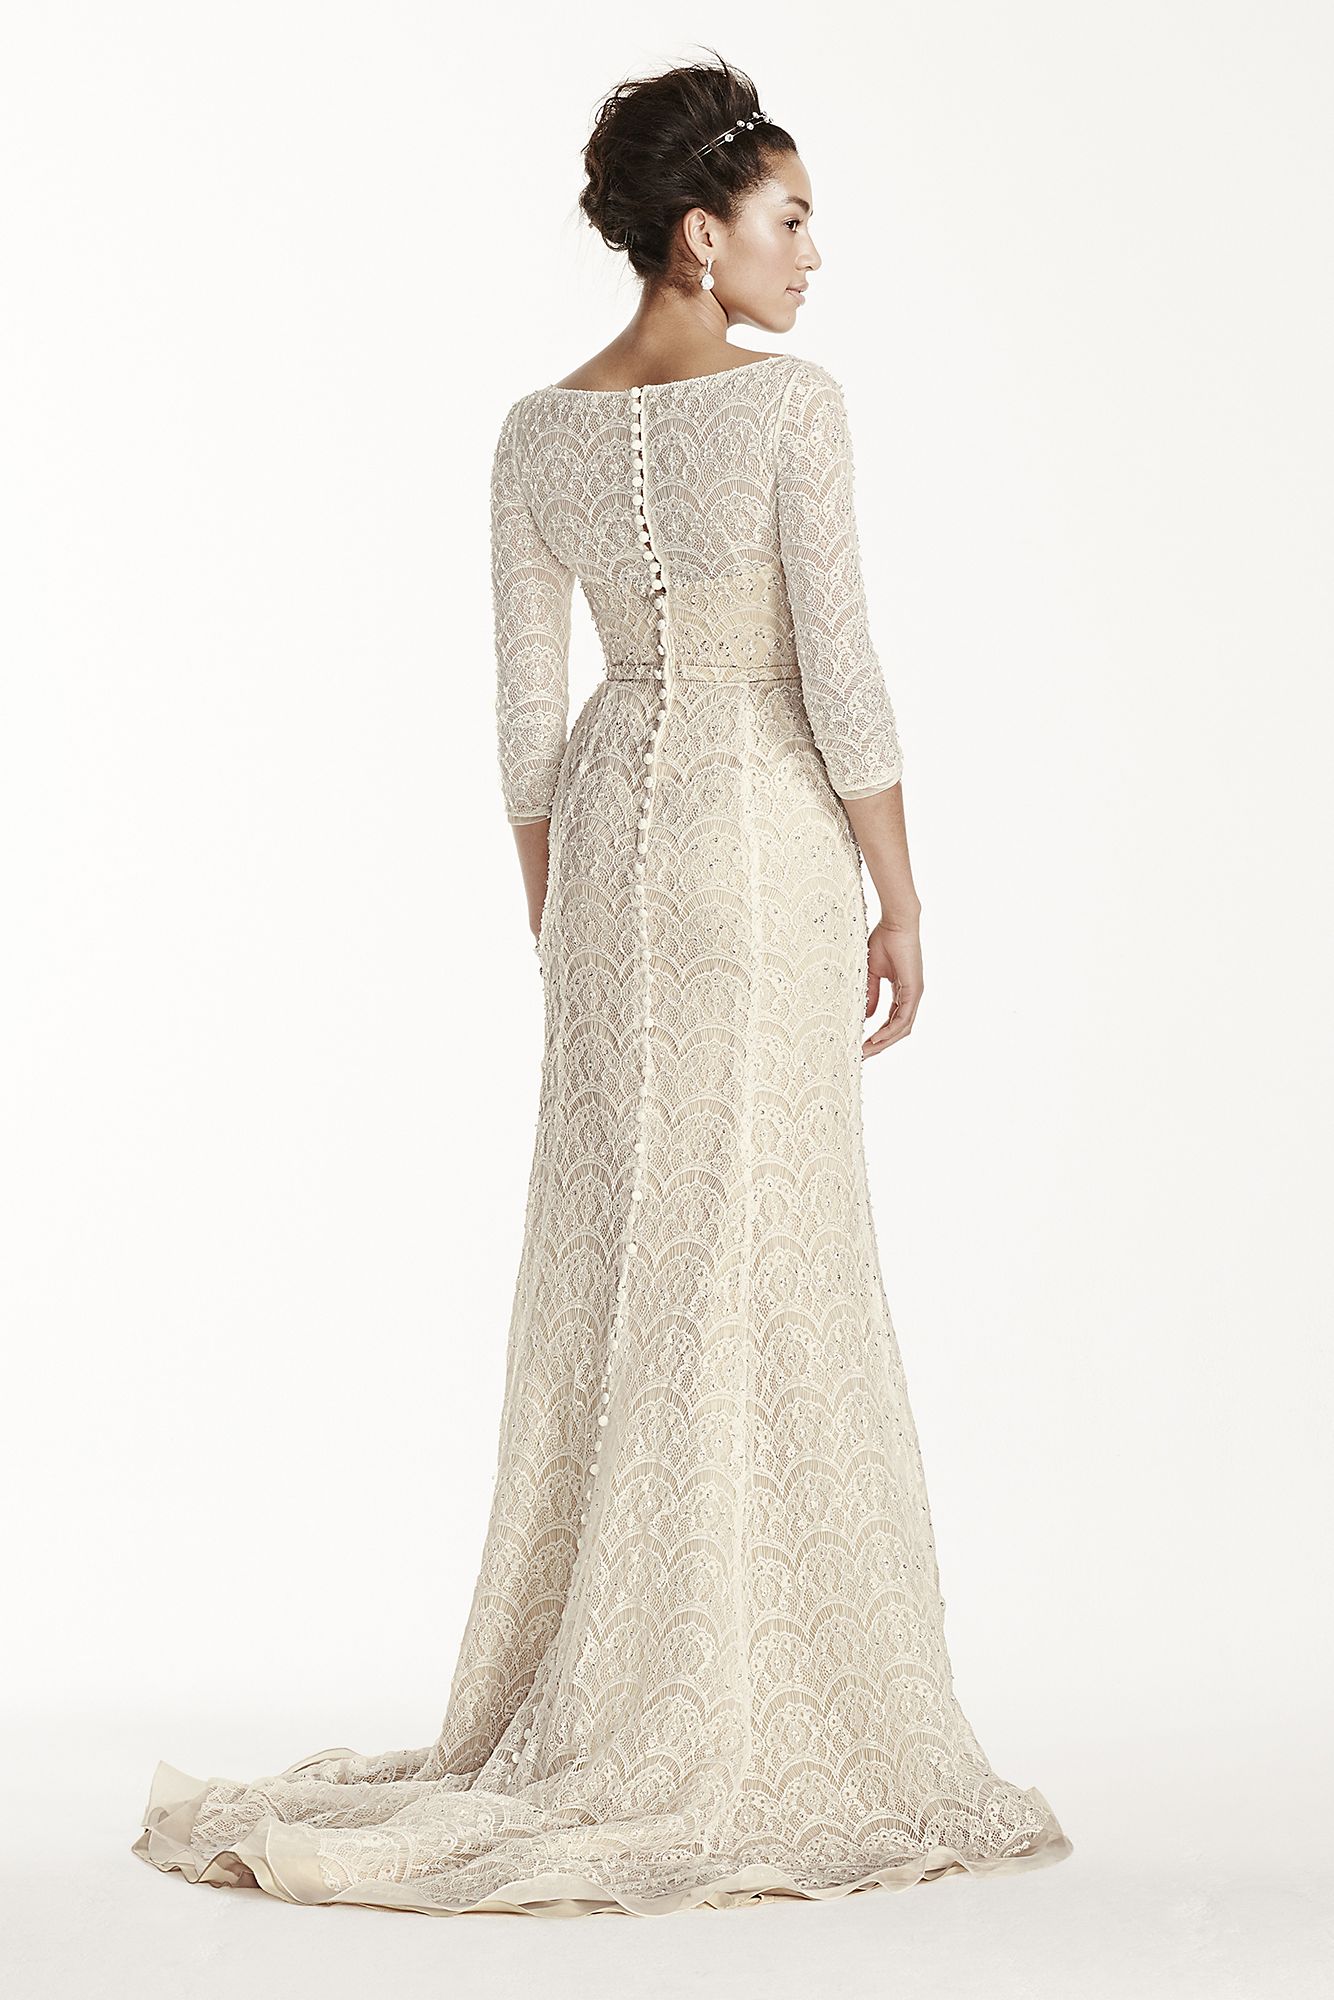 Beaded Lace 3/4 Sleeved Wedding Dress CWG711